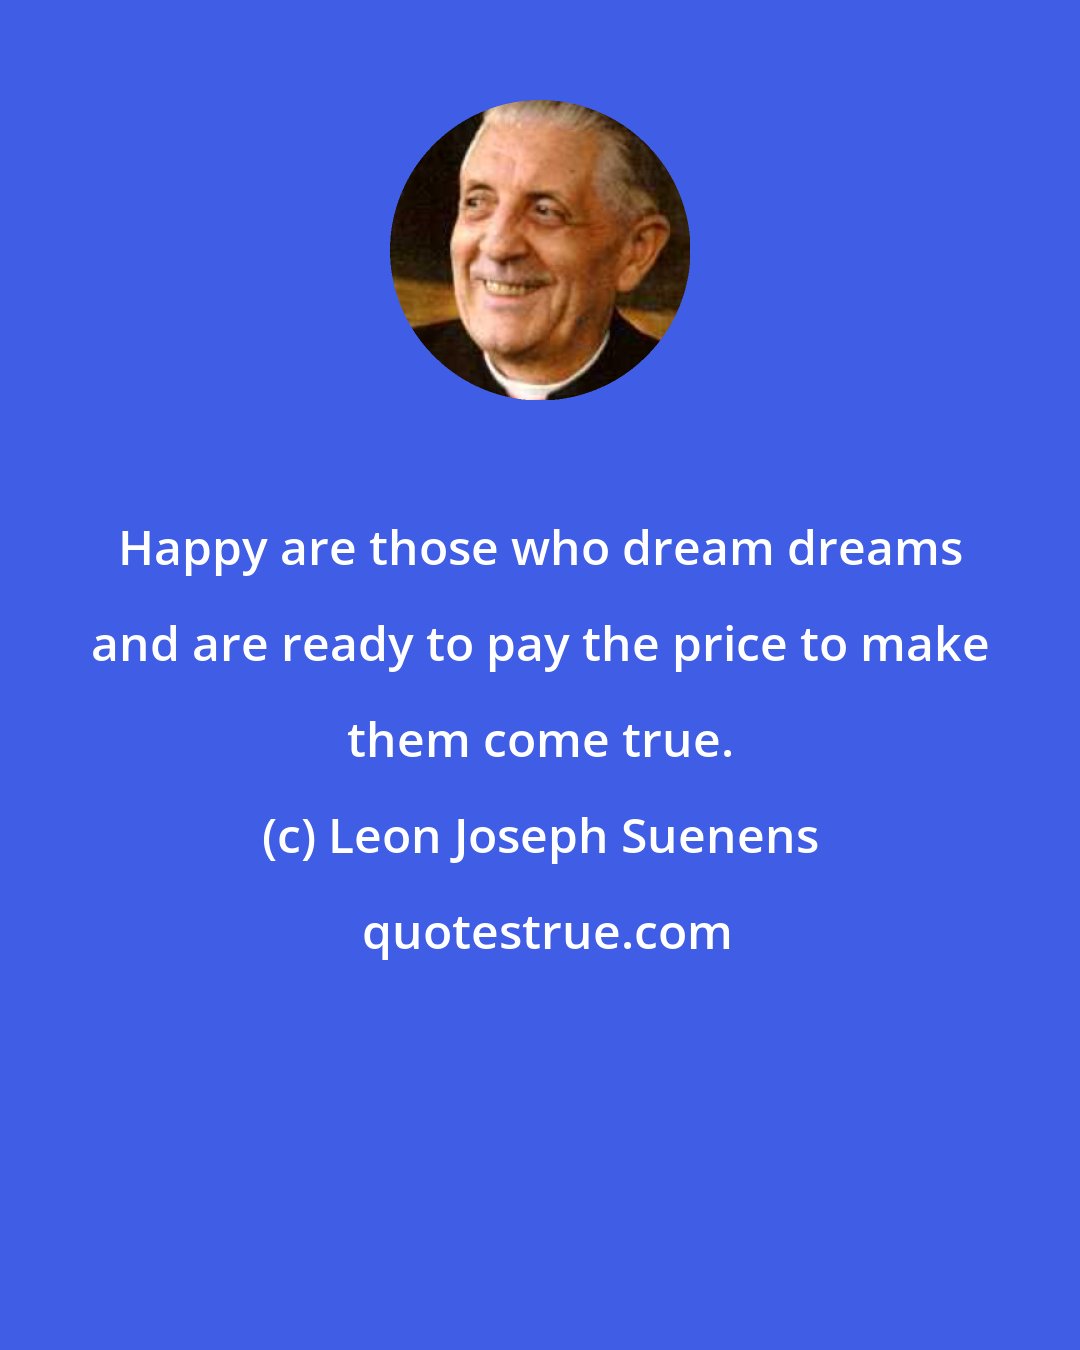 Leon Joseph Suenens: Happy are those who dream dreams and are ready to pay the price to make them come true.